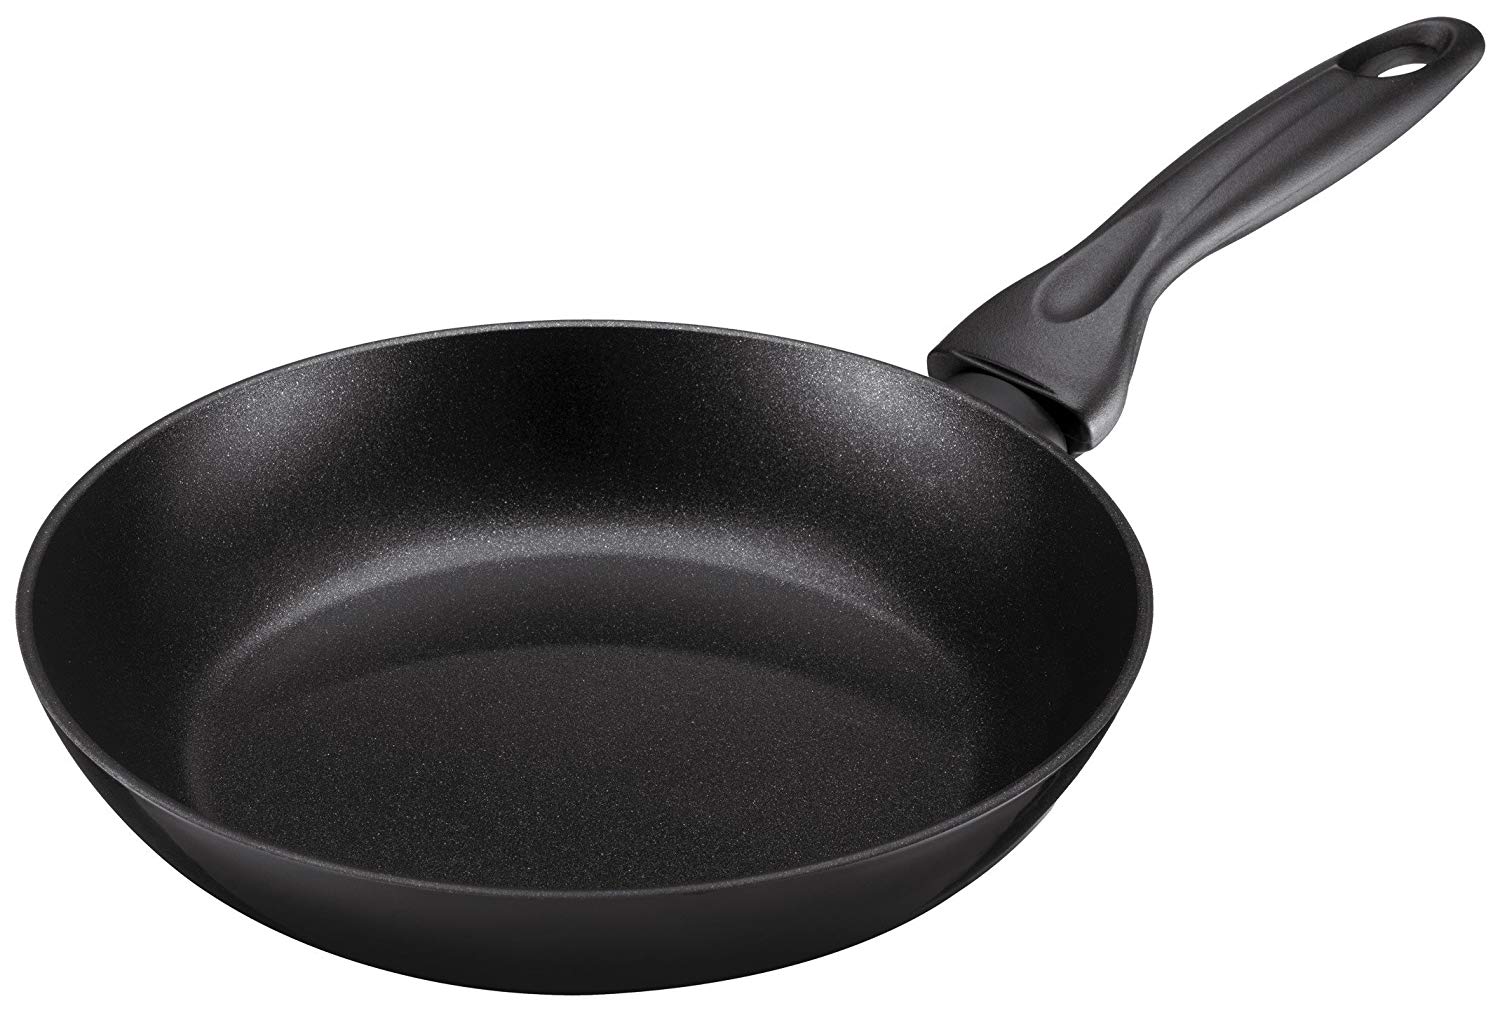 Kuhn Rikon Cucina Non-Stick Frying Pan, 18 Cm, Black